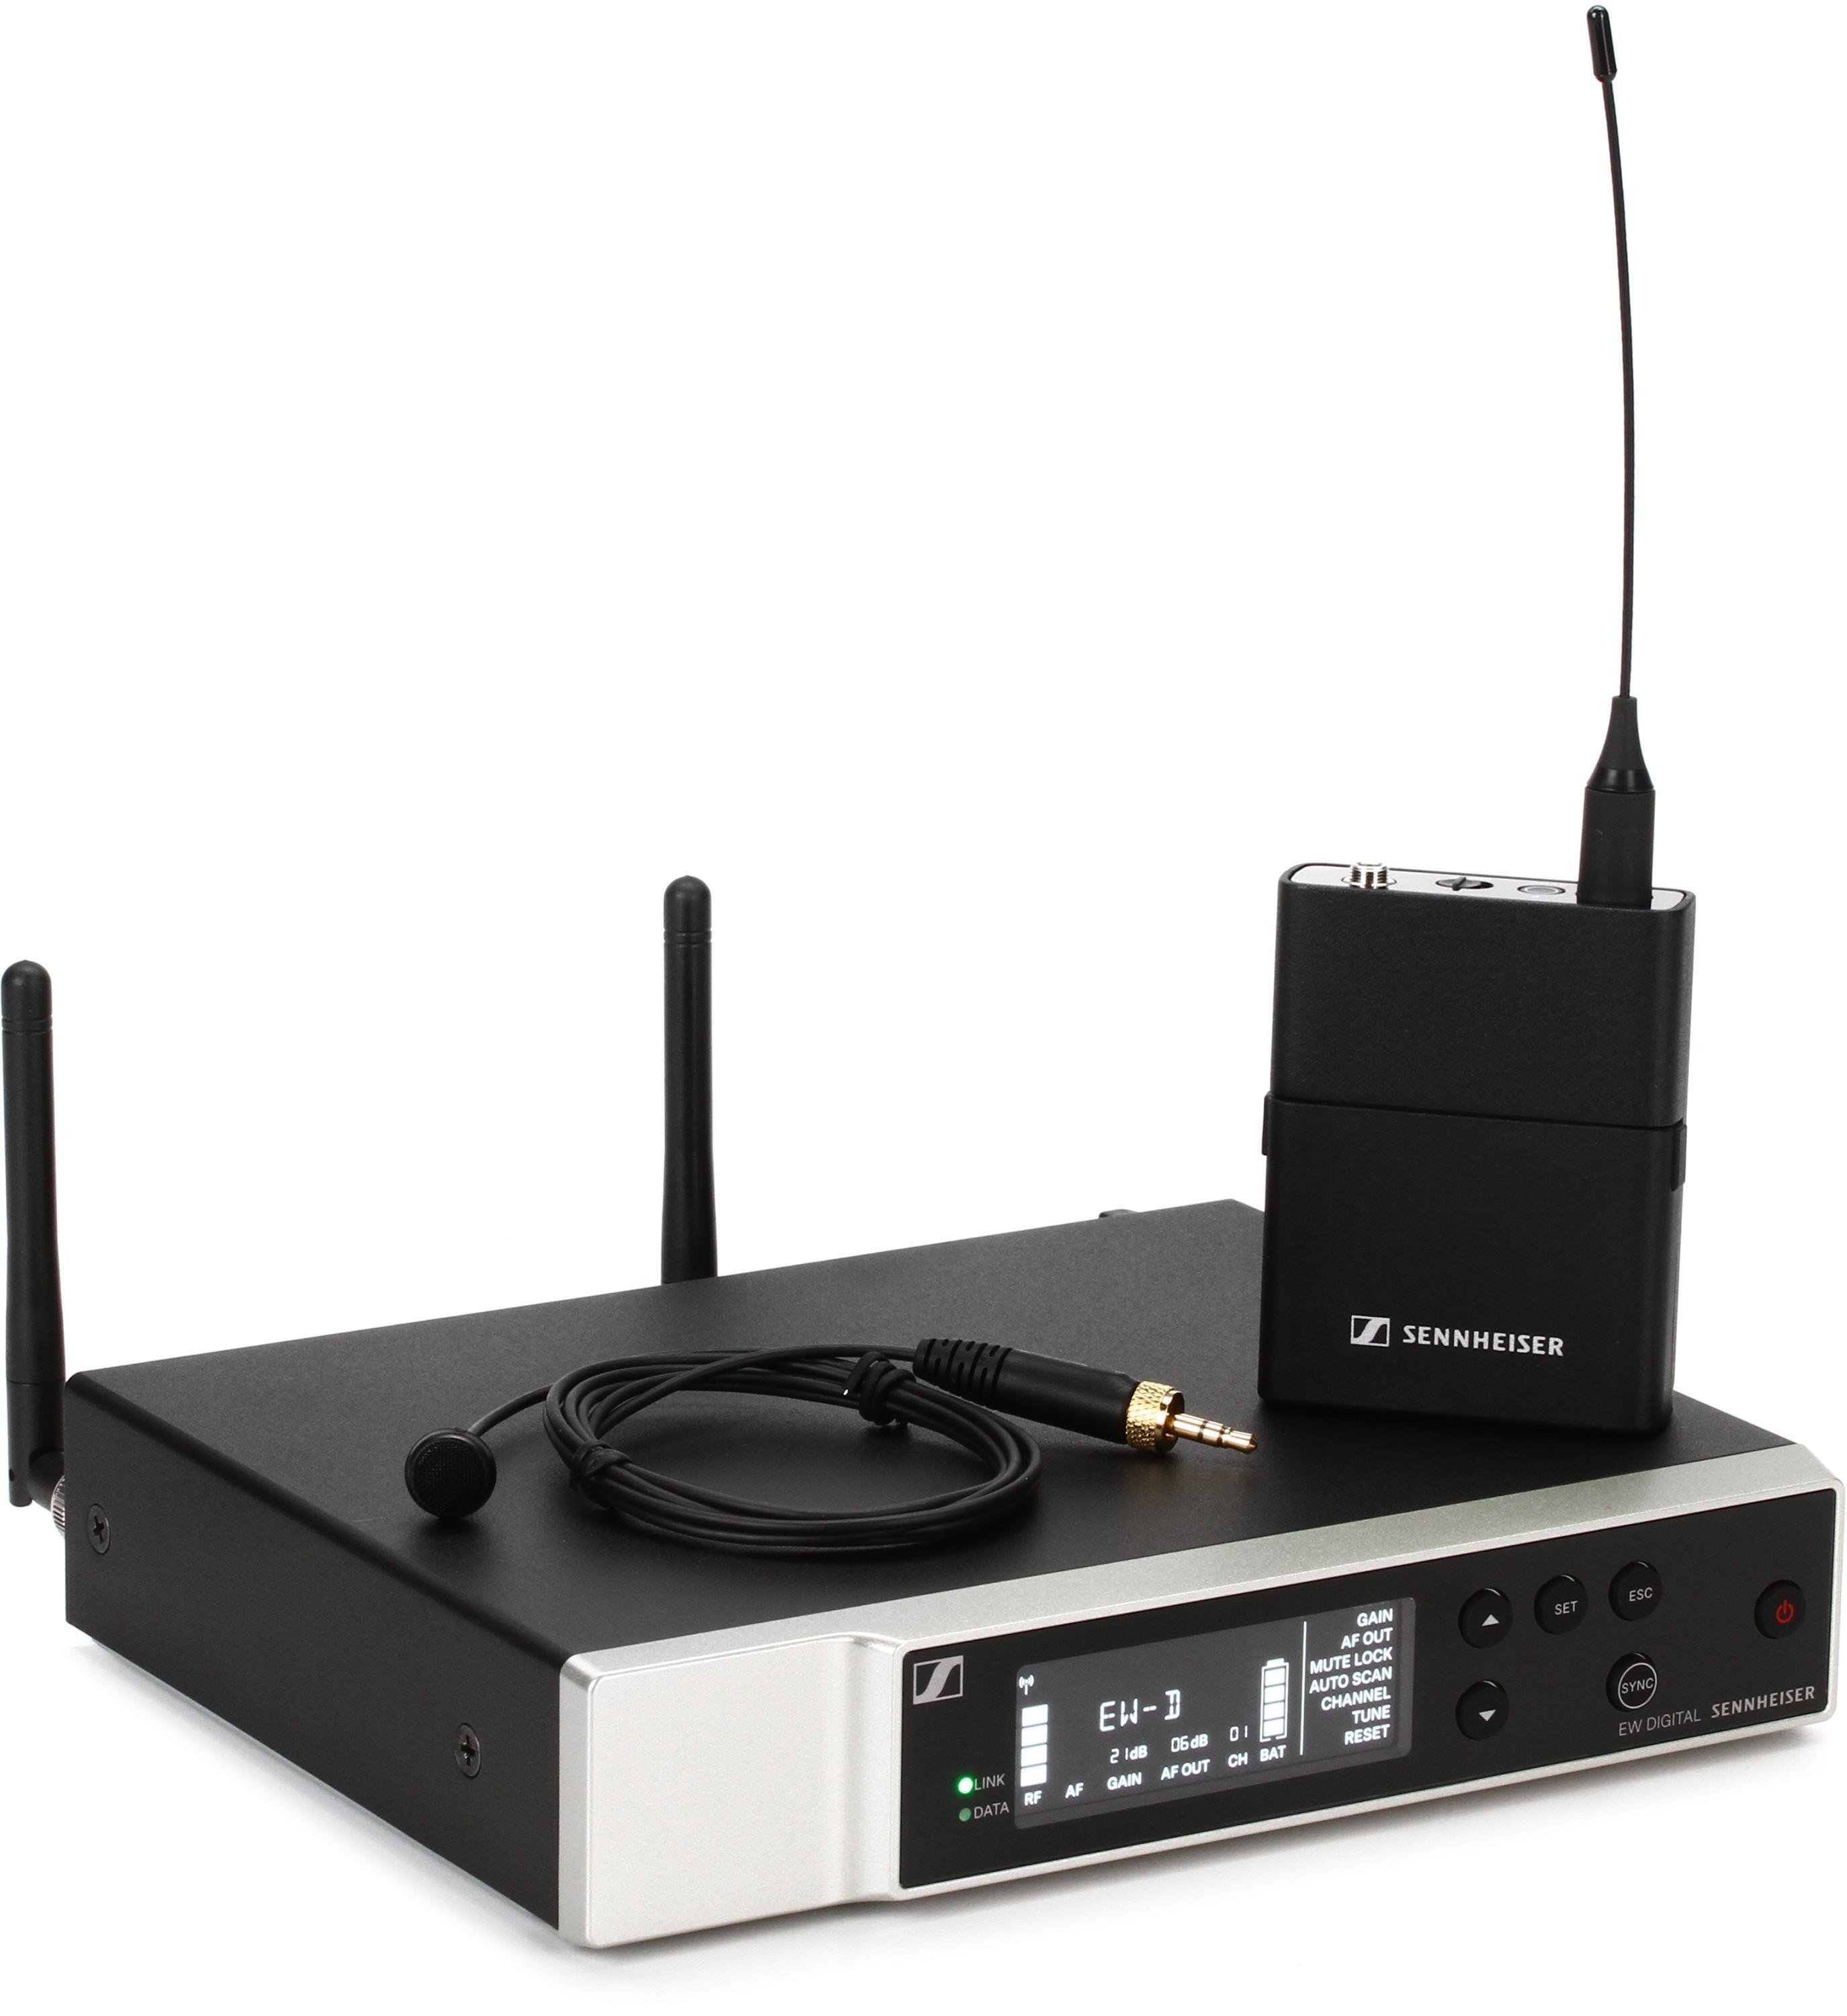 Dale Pro Audio Offers Sennheiser's Evolution Wireless Digital